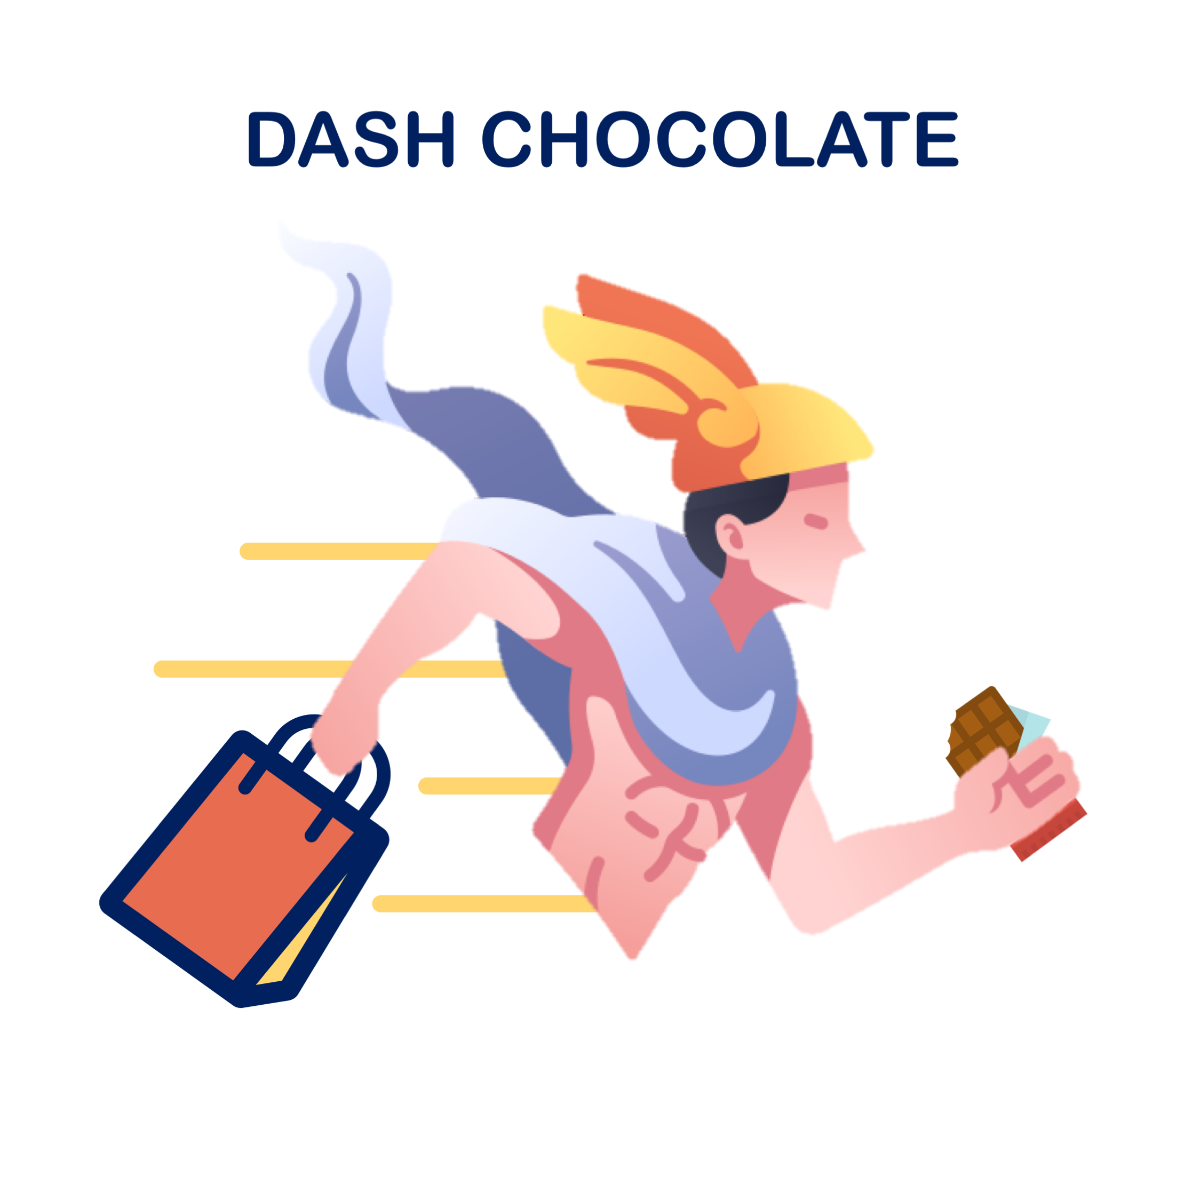 DASH CHOCOLATE